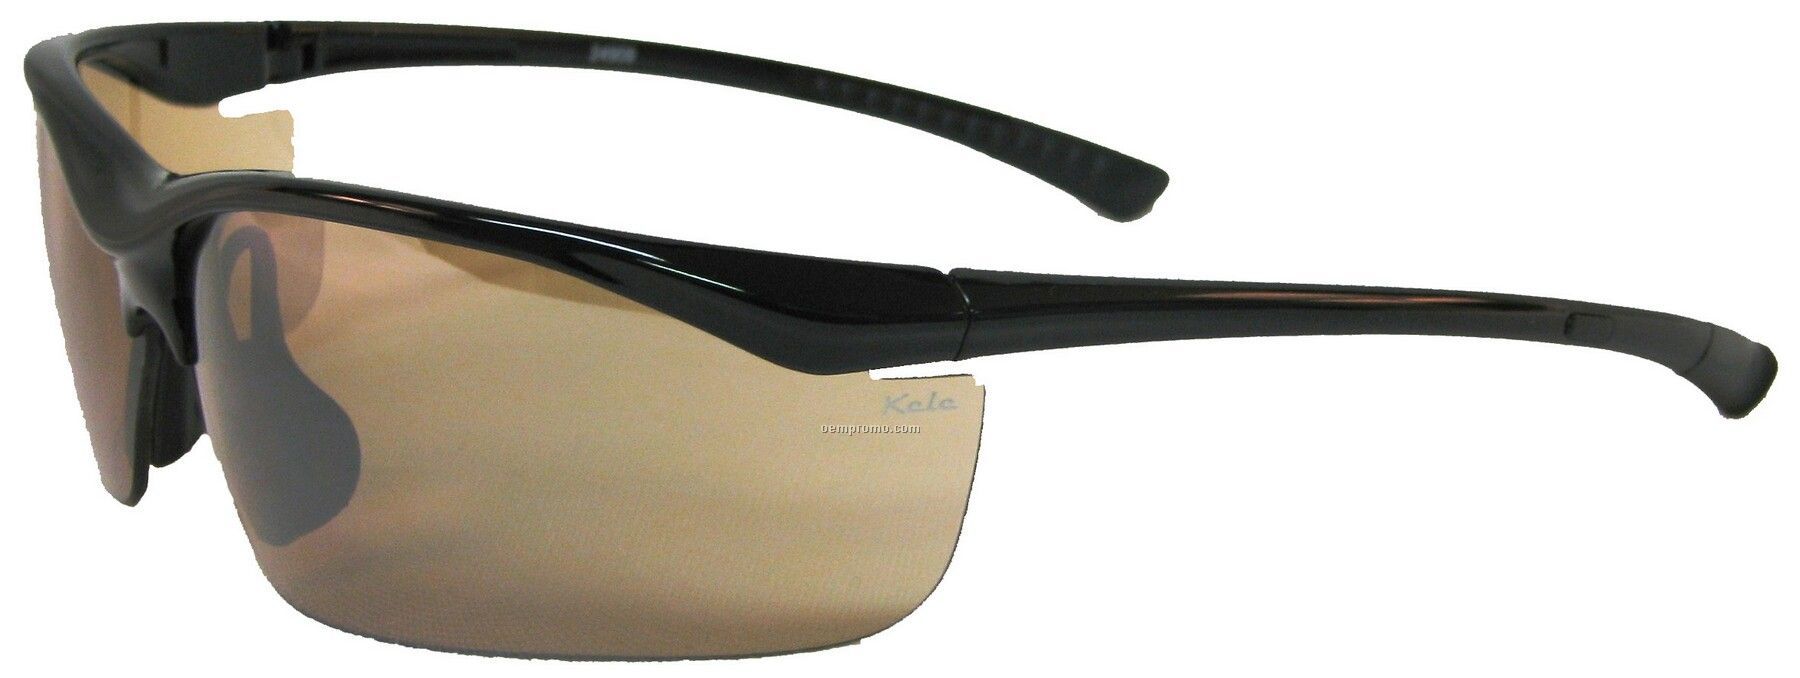 Torch Sunglasses - Black Gloss Frame W/Medium Amber Golf Tint Lens